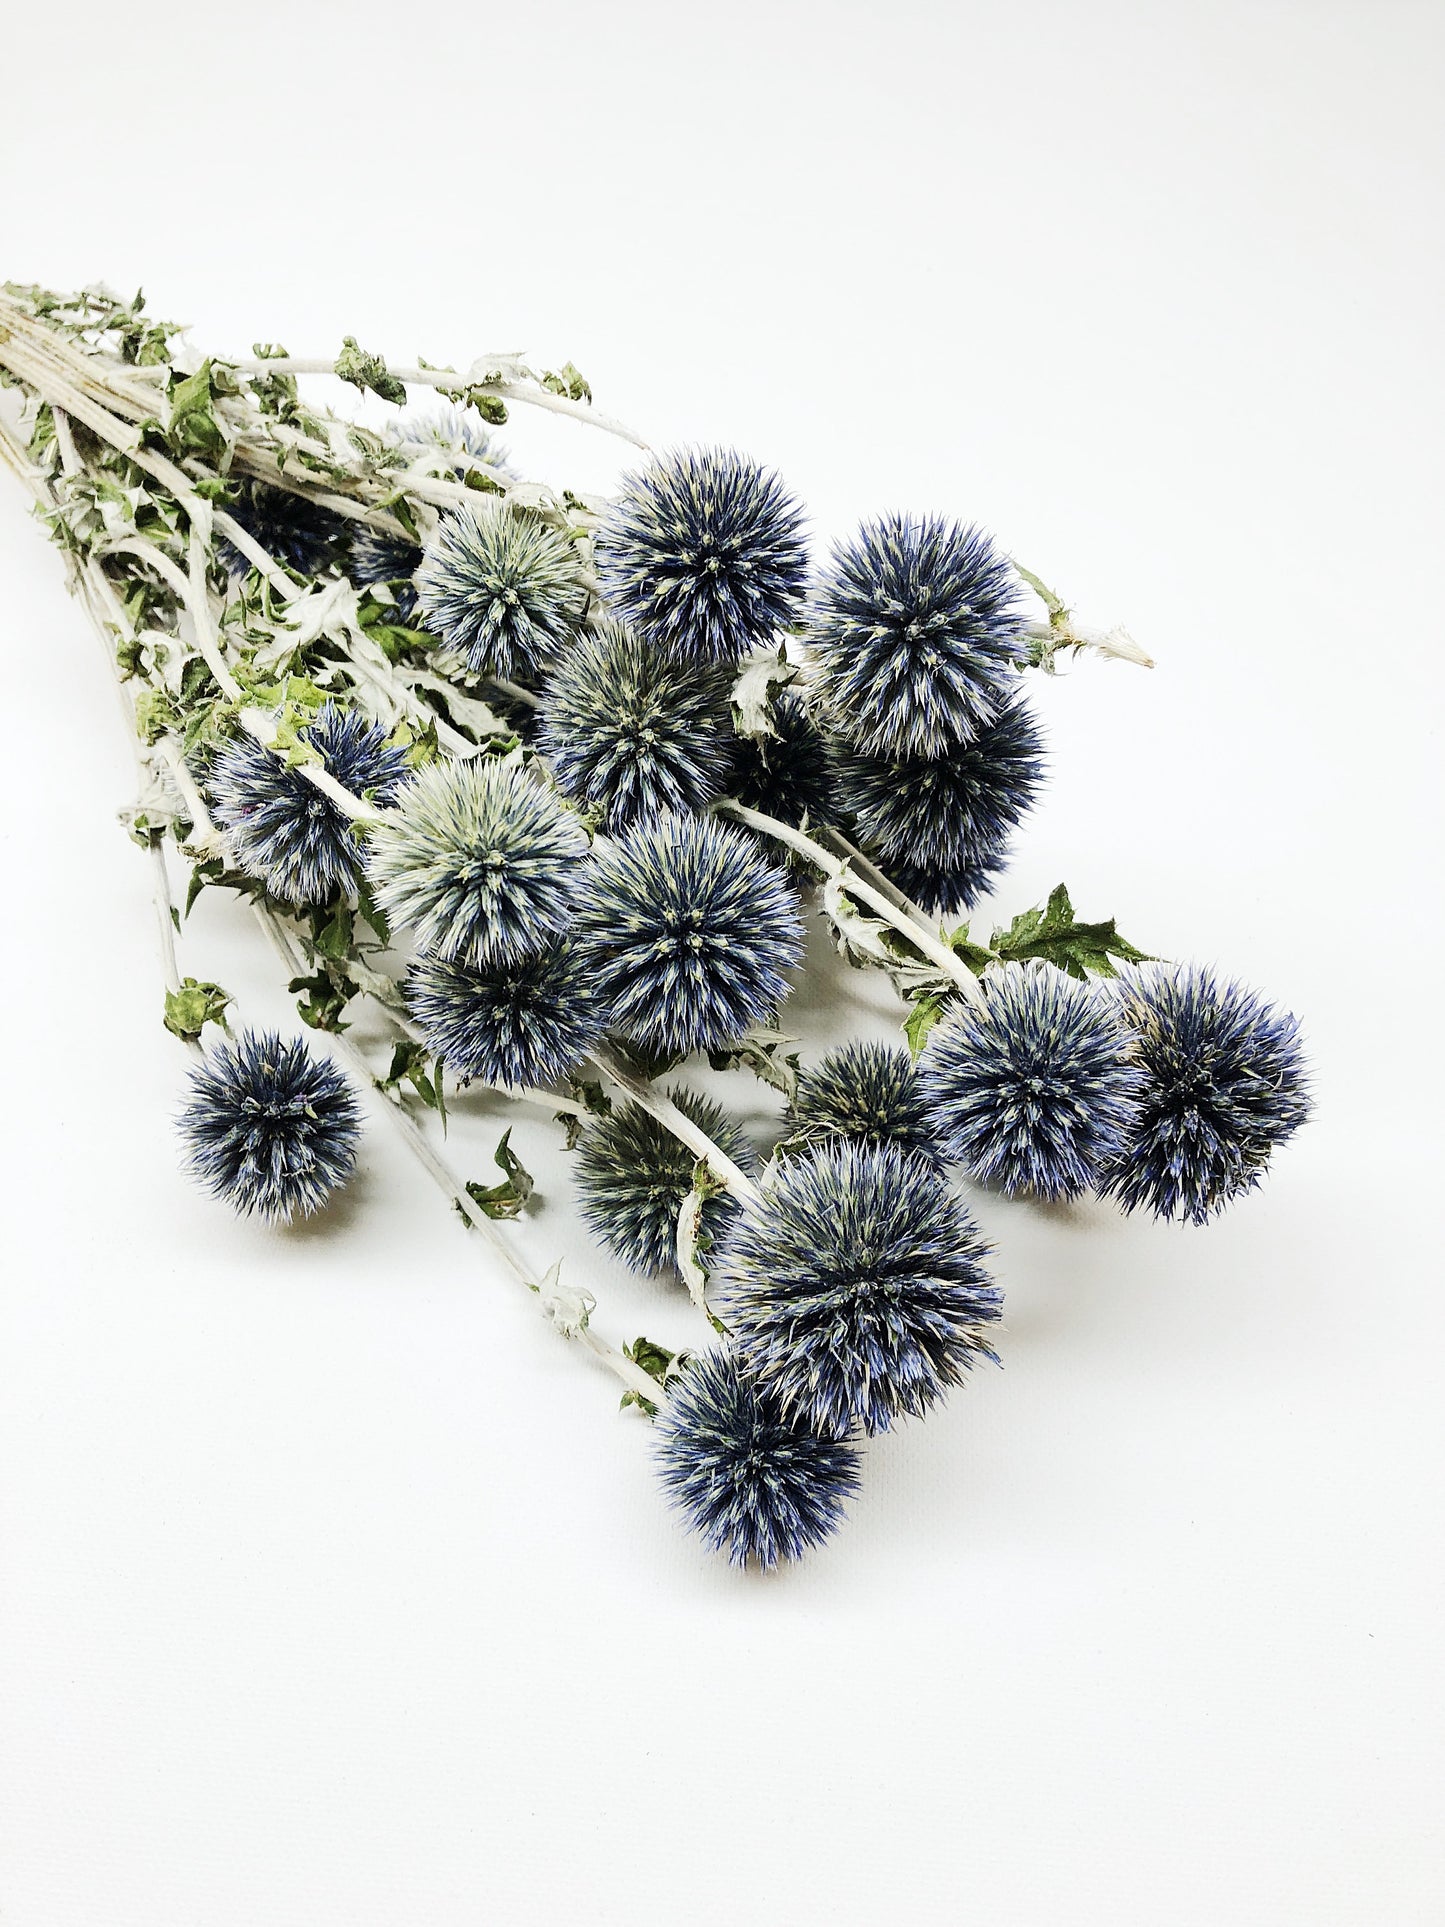 Dried Blue Globe Thistle, Long Stem, Echinops, Green, Purple, Boutonniere Flower, Flowers, Bouquets, Wedding, Floral, DIY, Ball Decor